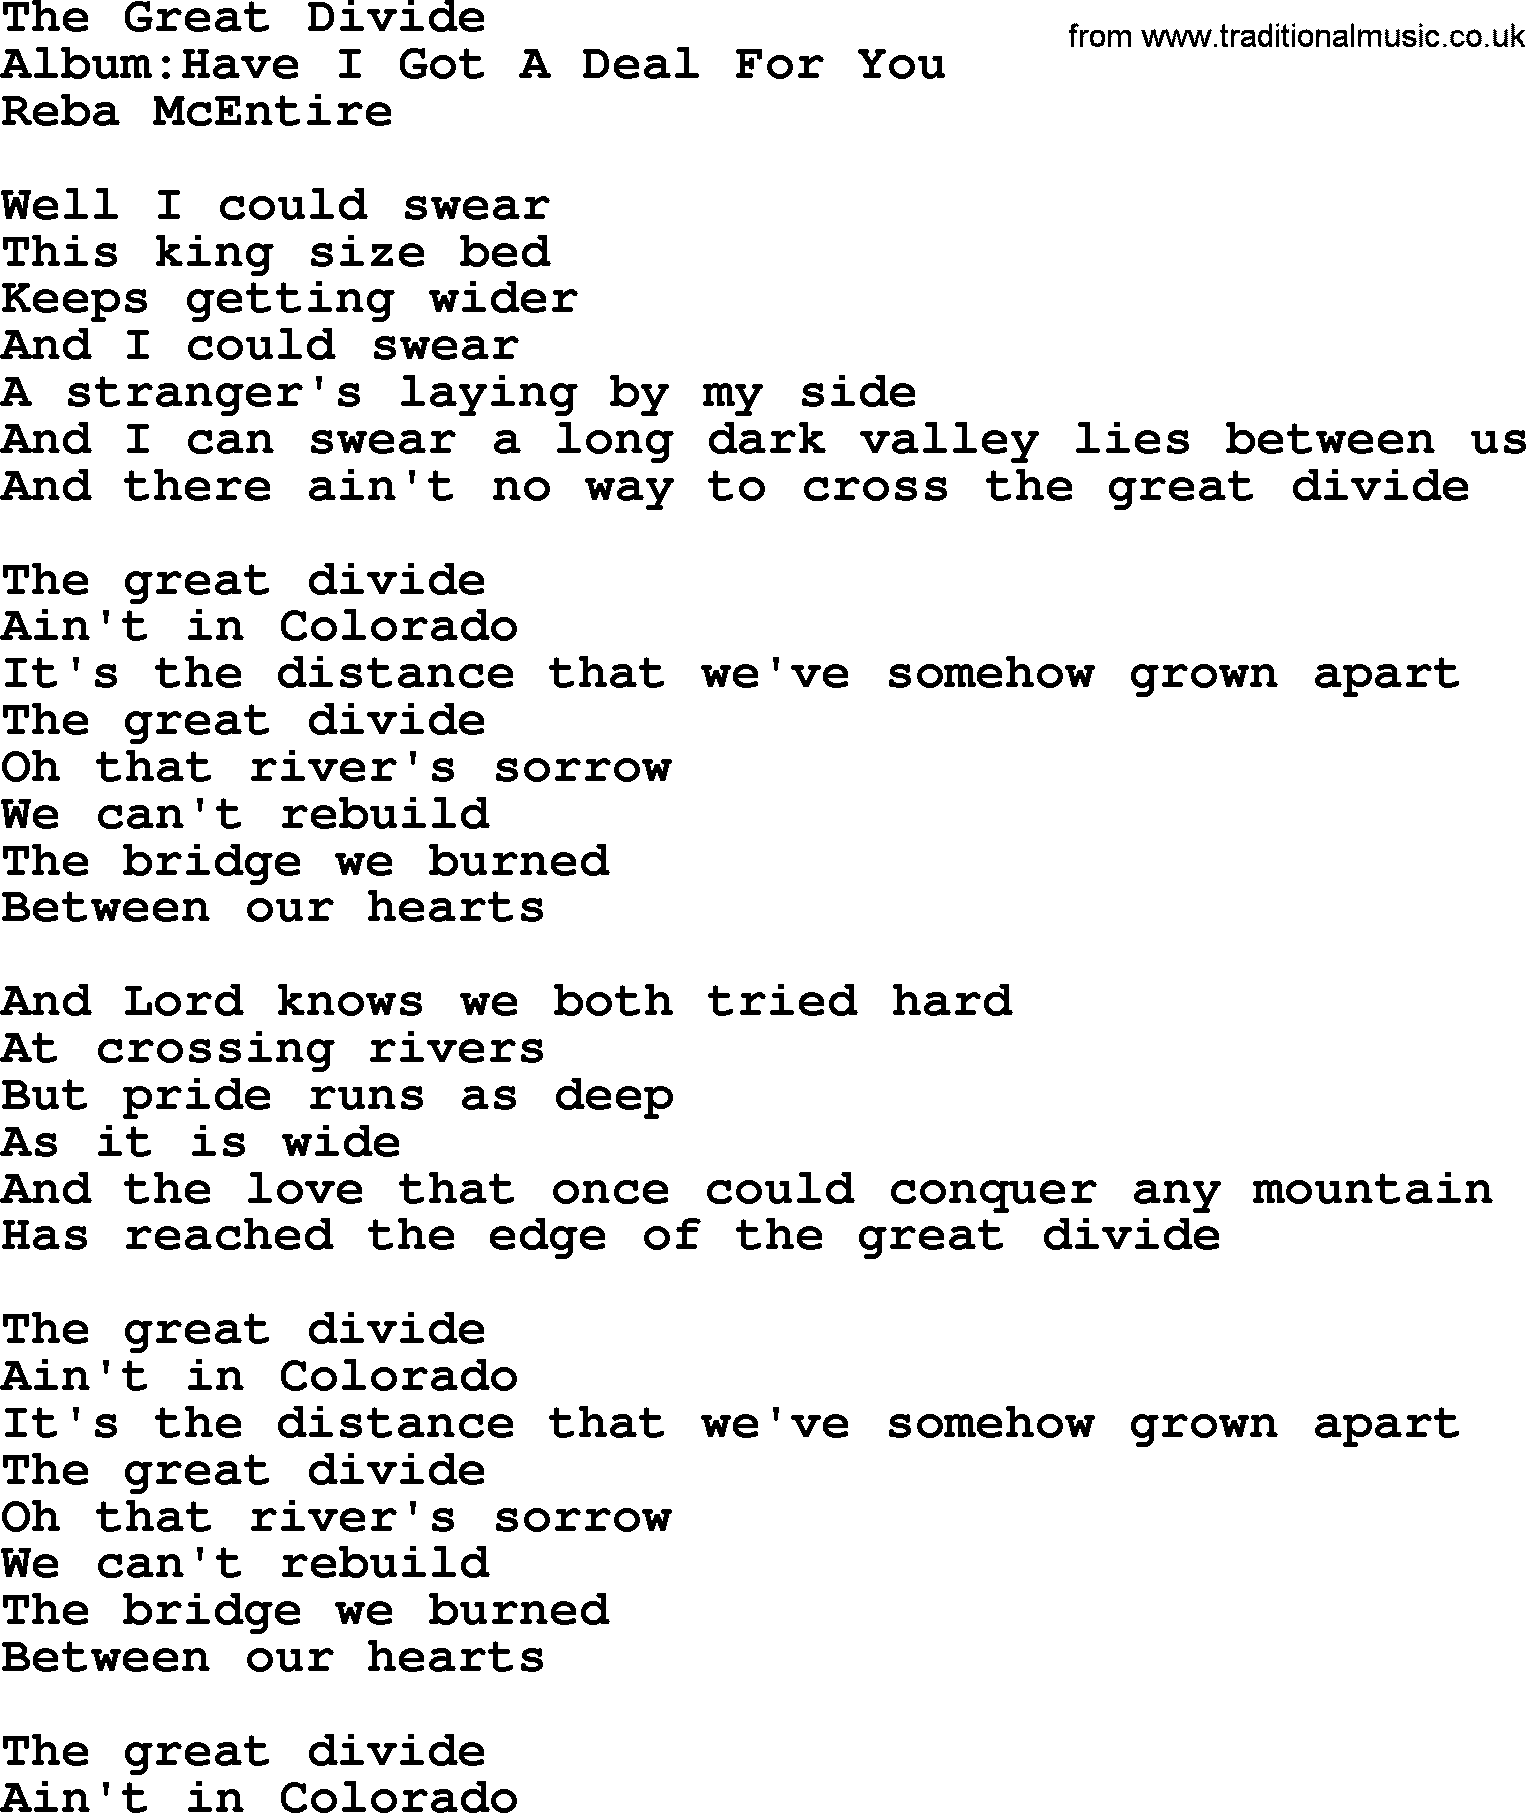 Reba McEntire song: The Great Divide lyrics